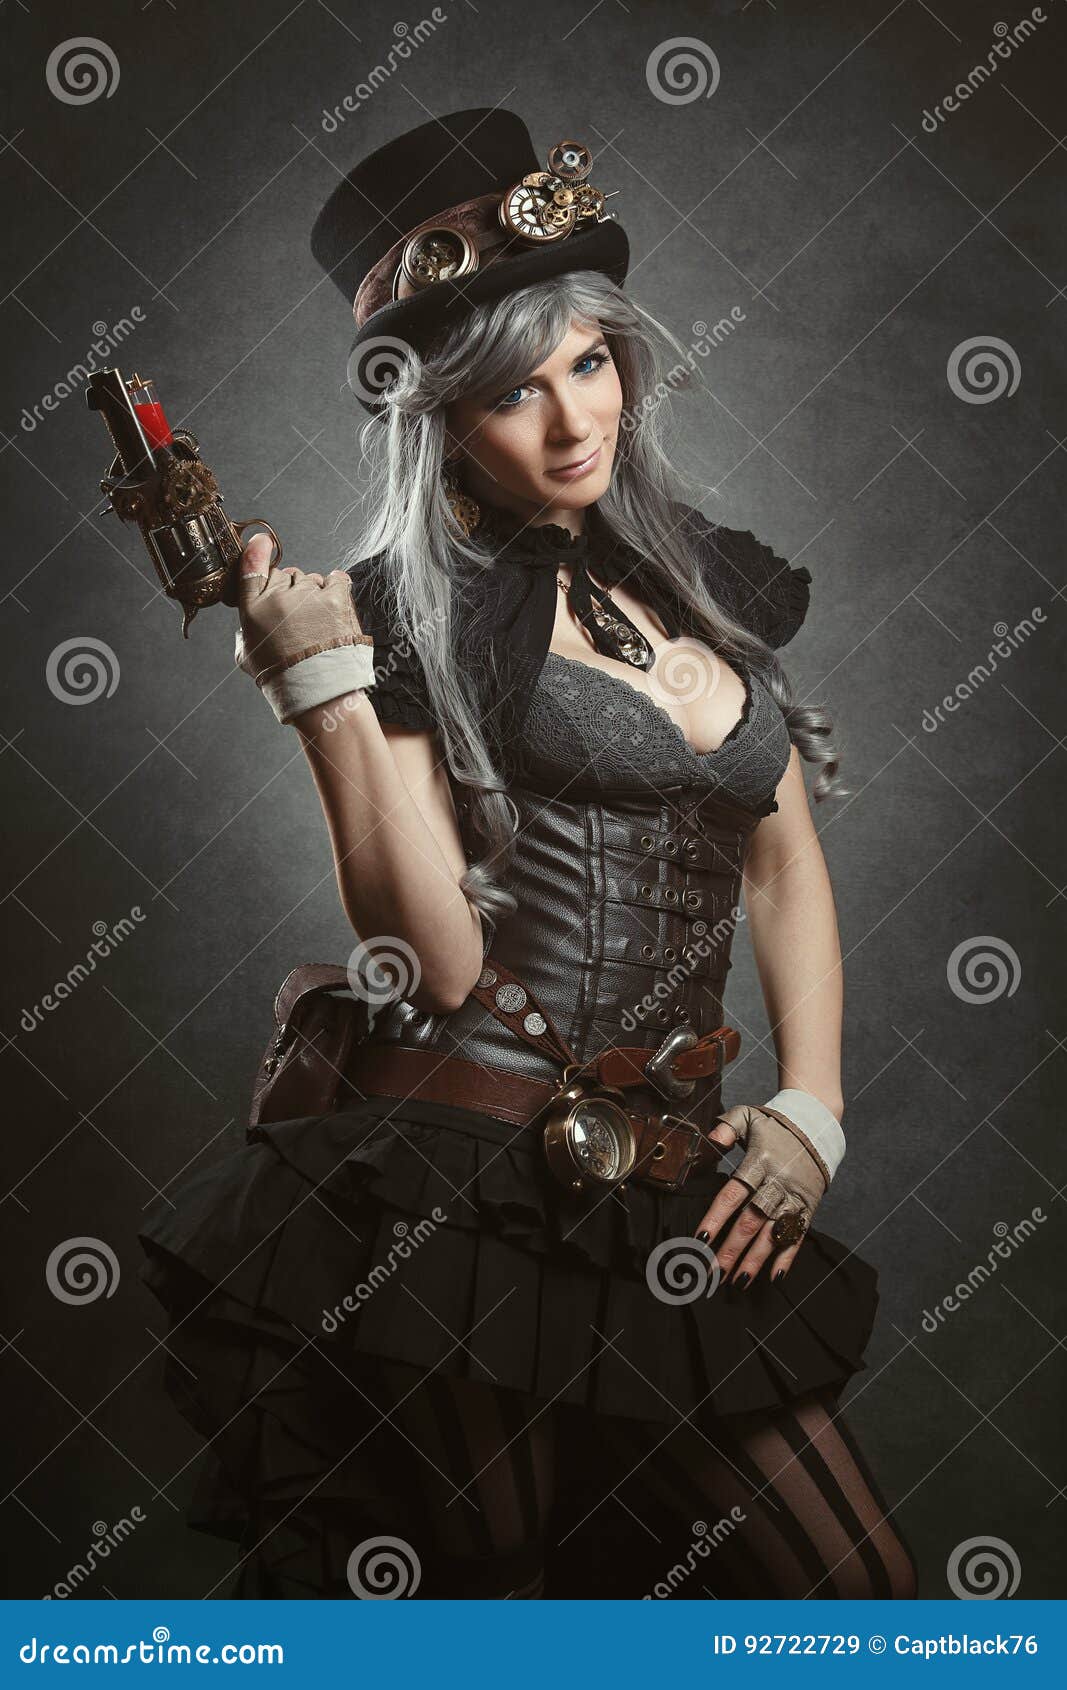 steampunk girl with firearm